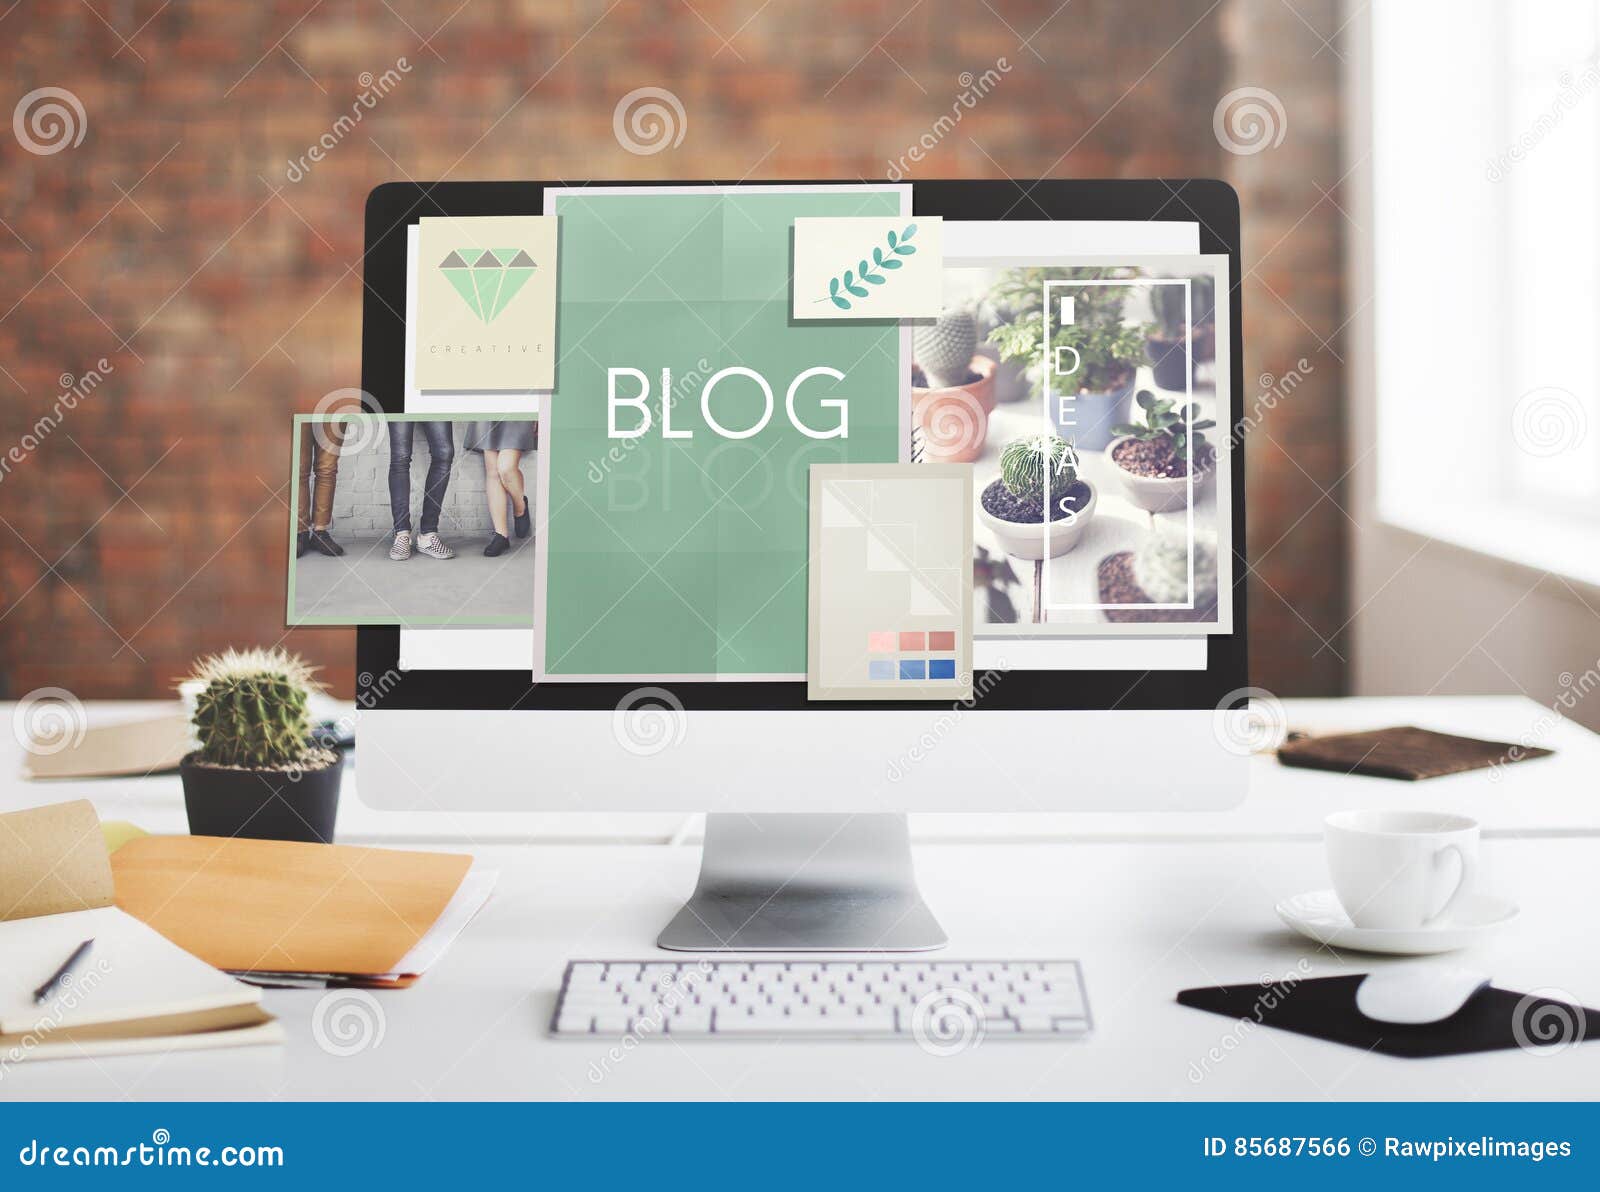 blog blogging ideas icons graphic concept